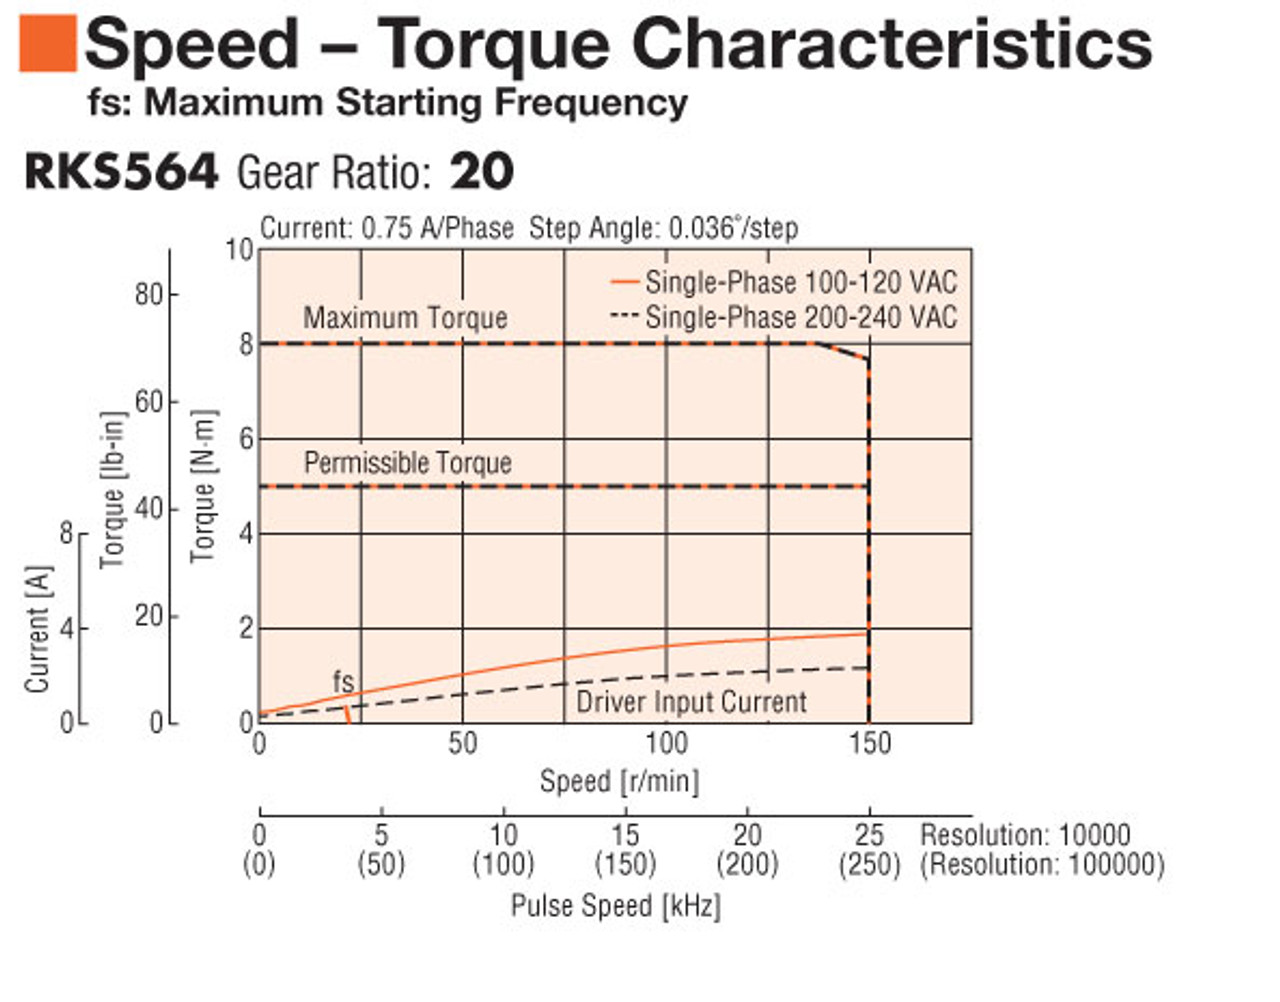 PKE564MC-TS20 - Speed-Torque